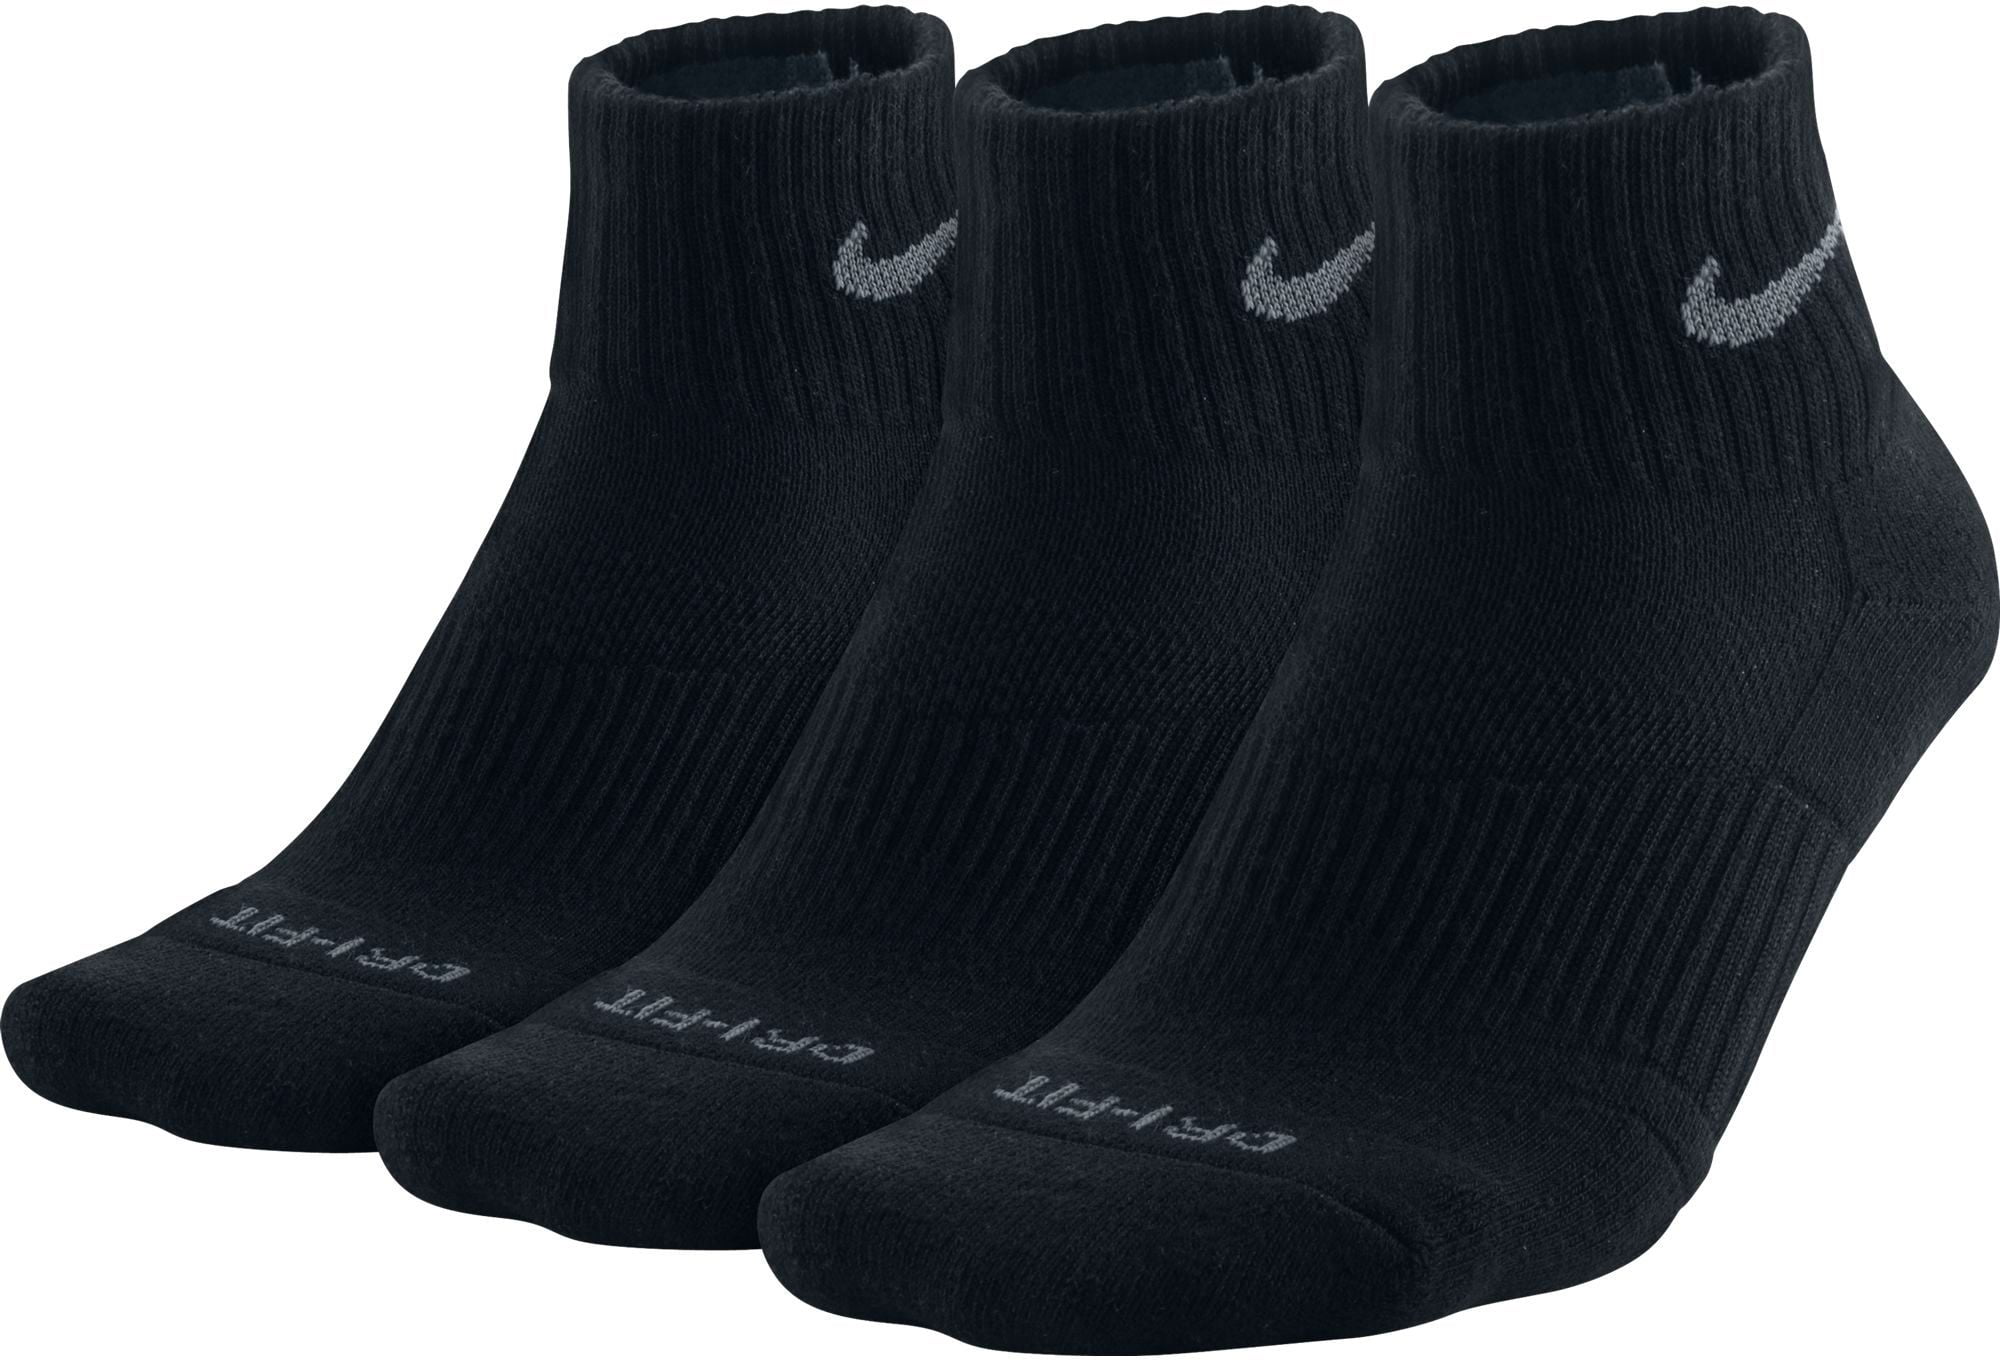 Nike - Nike Dri-FIT Cushion Quarter Socks 3 Pack, Black, L - Walmart